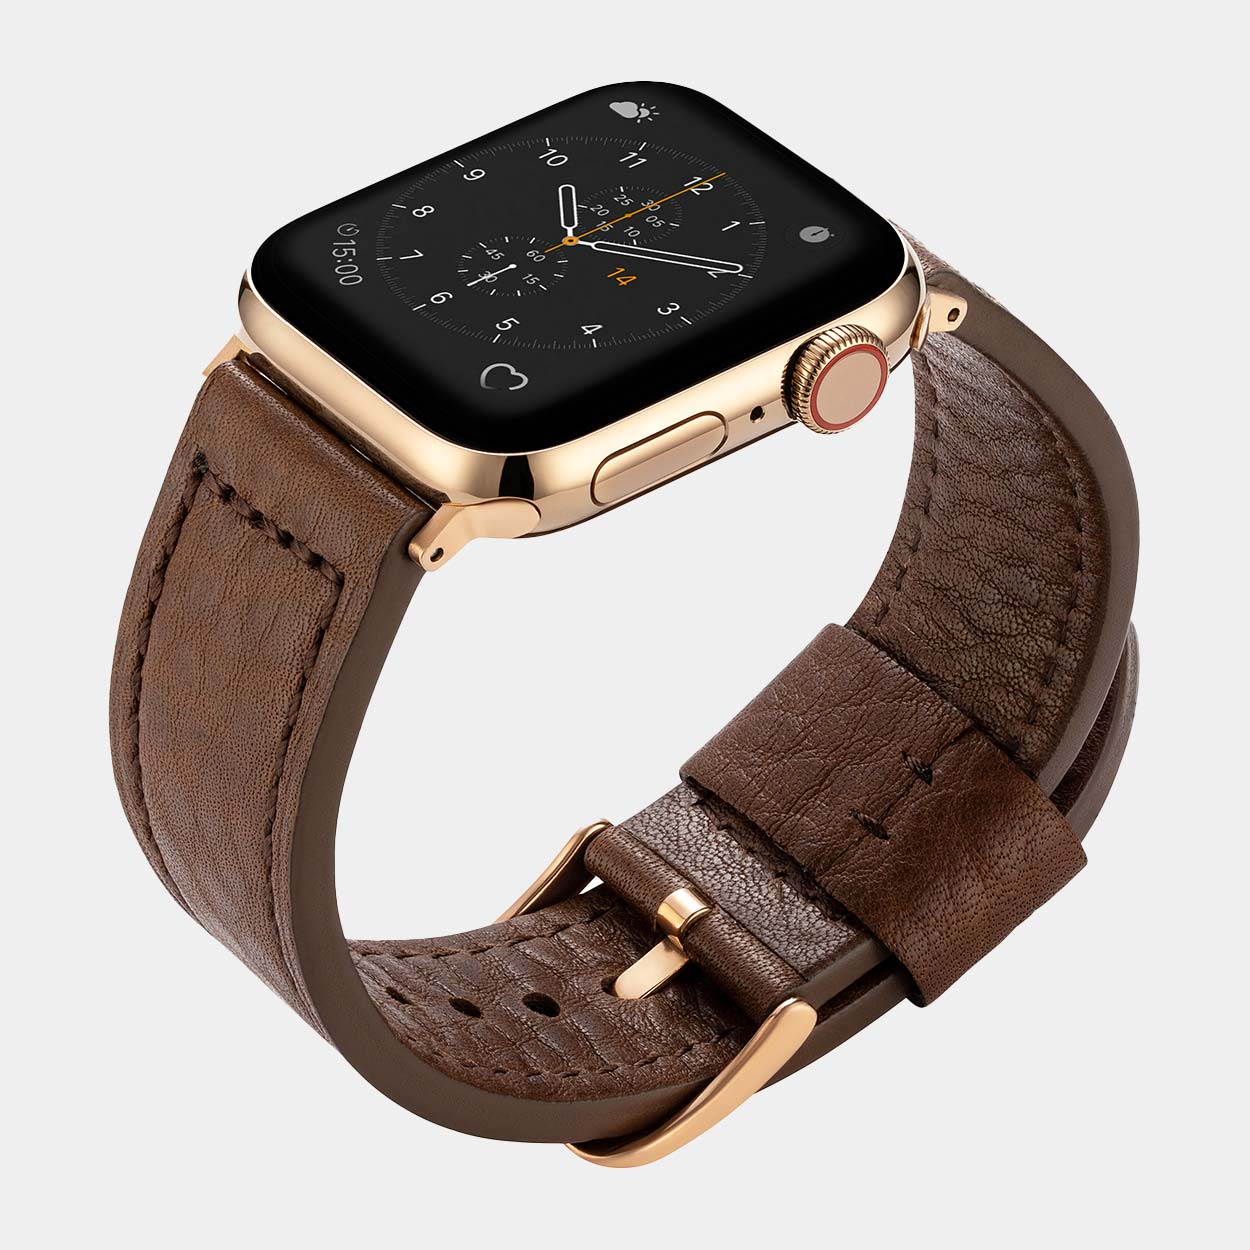 Lond Luxury Apple Watch Strap - Brown Leather - Buckle & Band - LON-38-BRN-GL